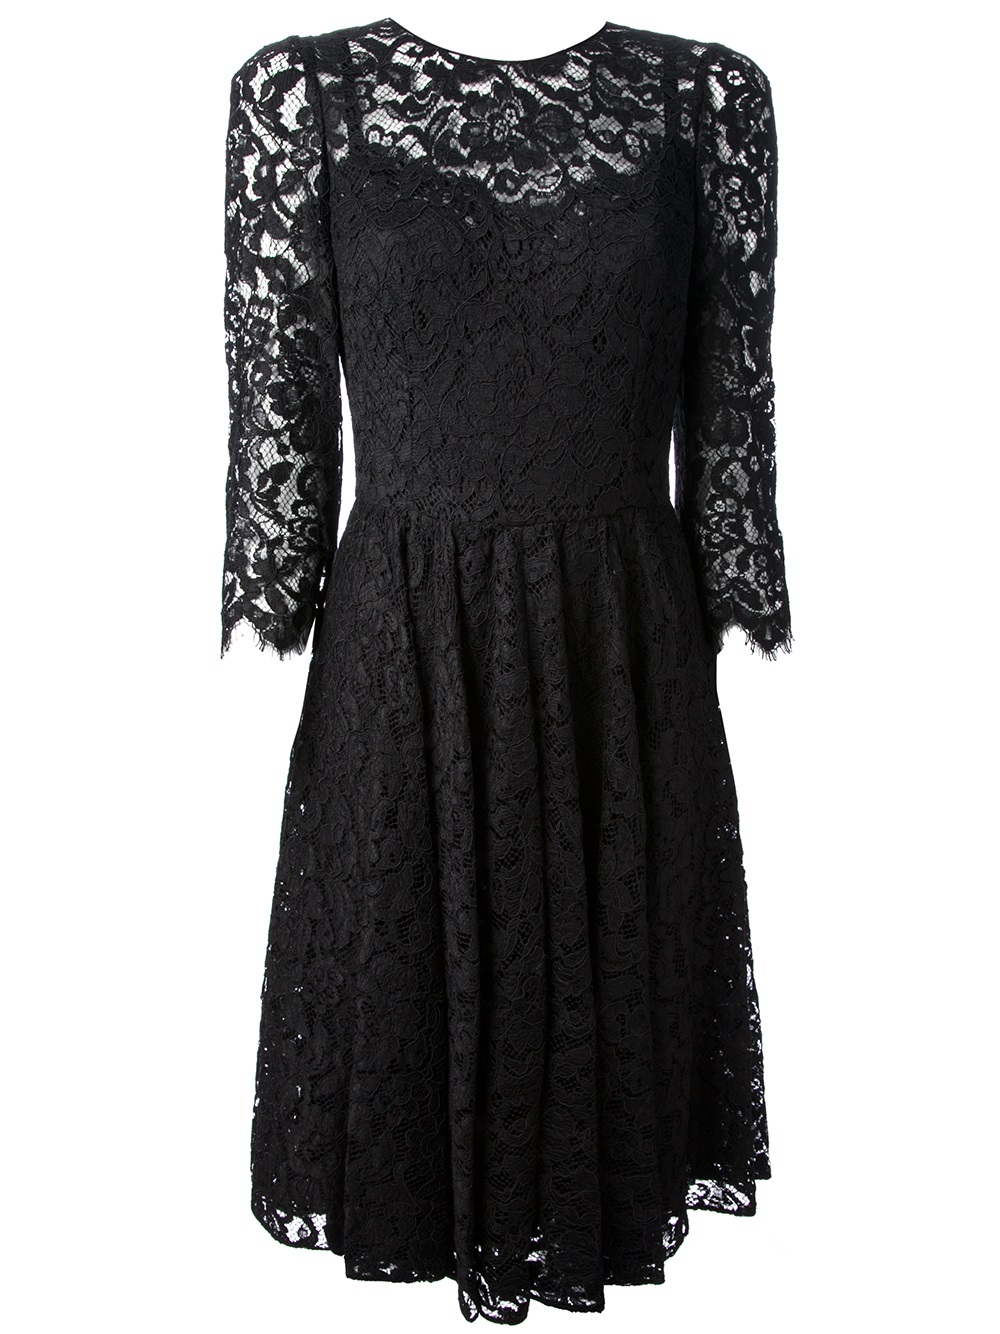 Dolce & Gabbana Lace Dress in Black | Lyst